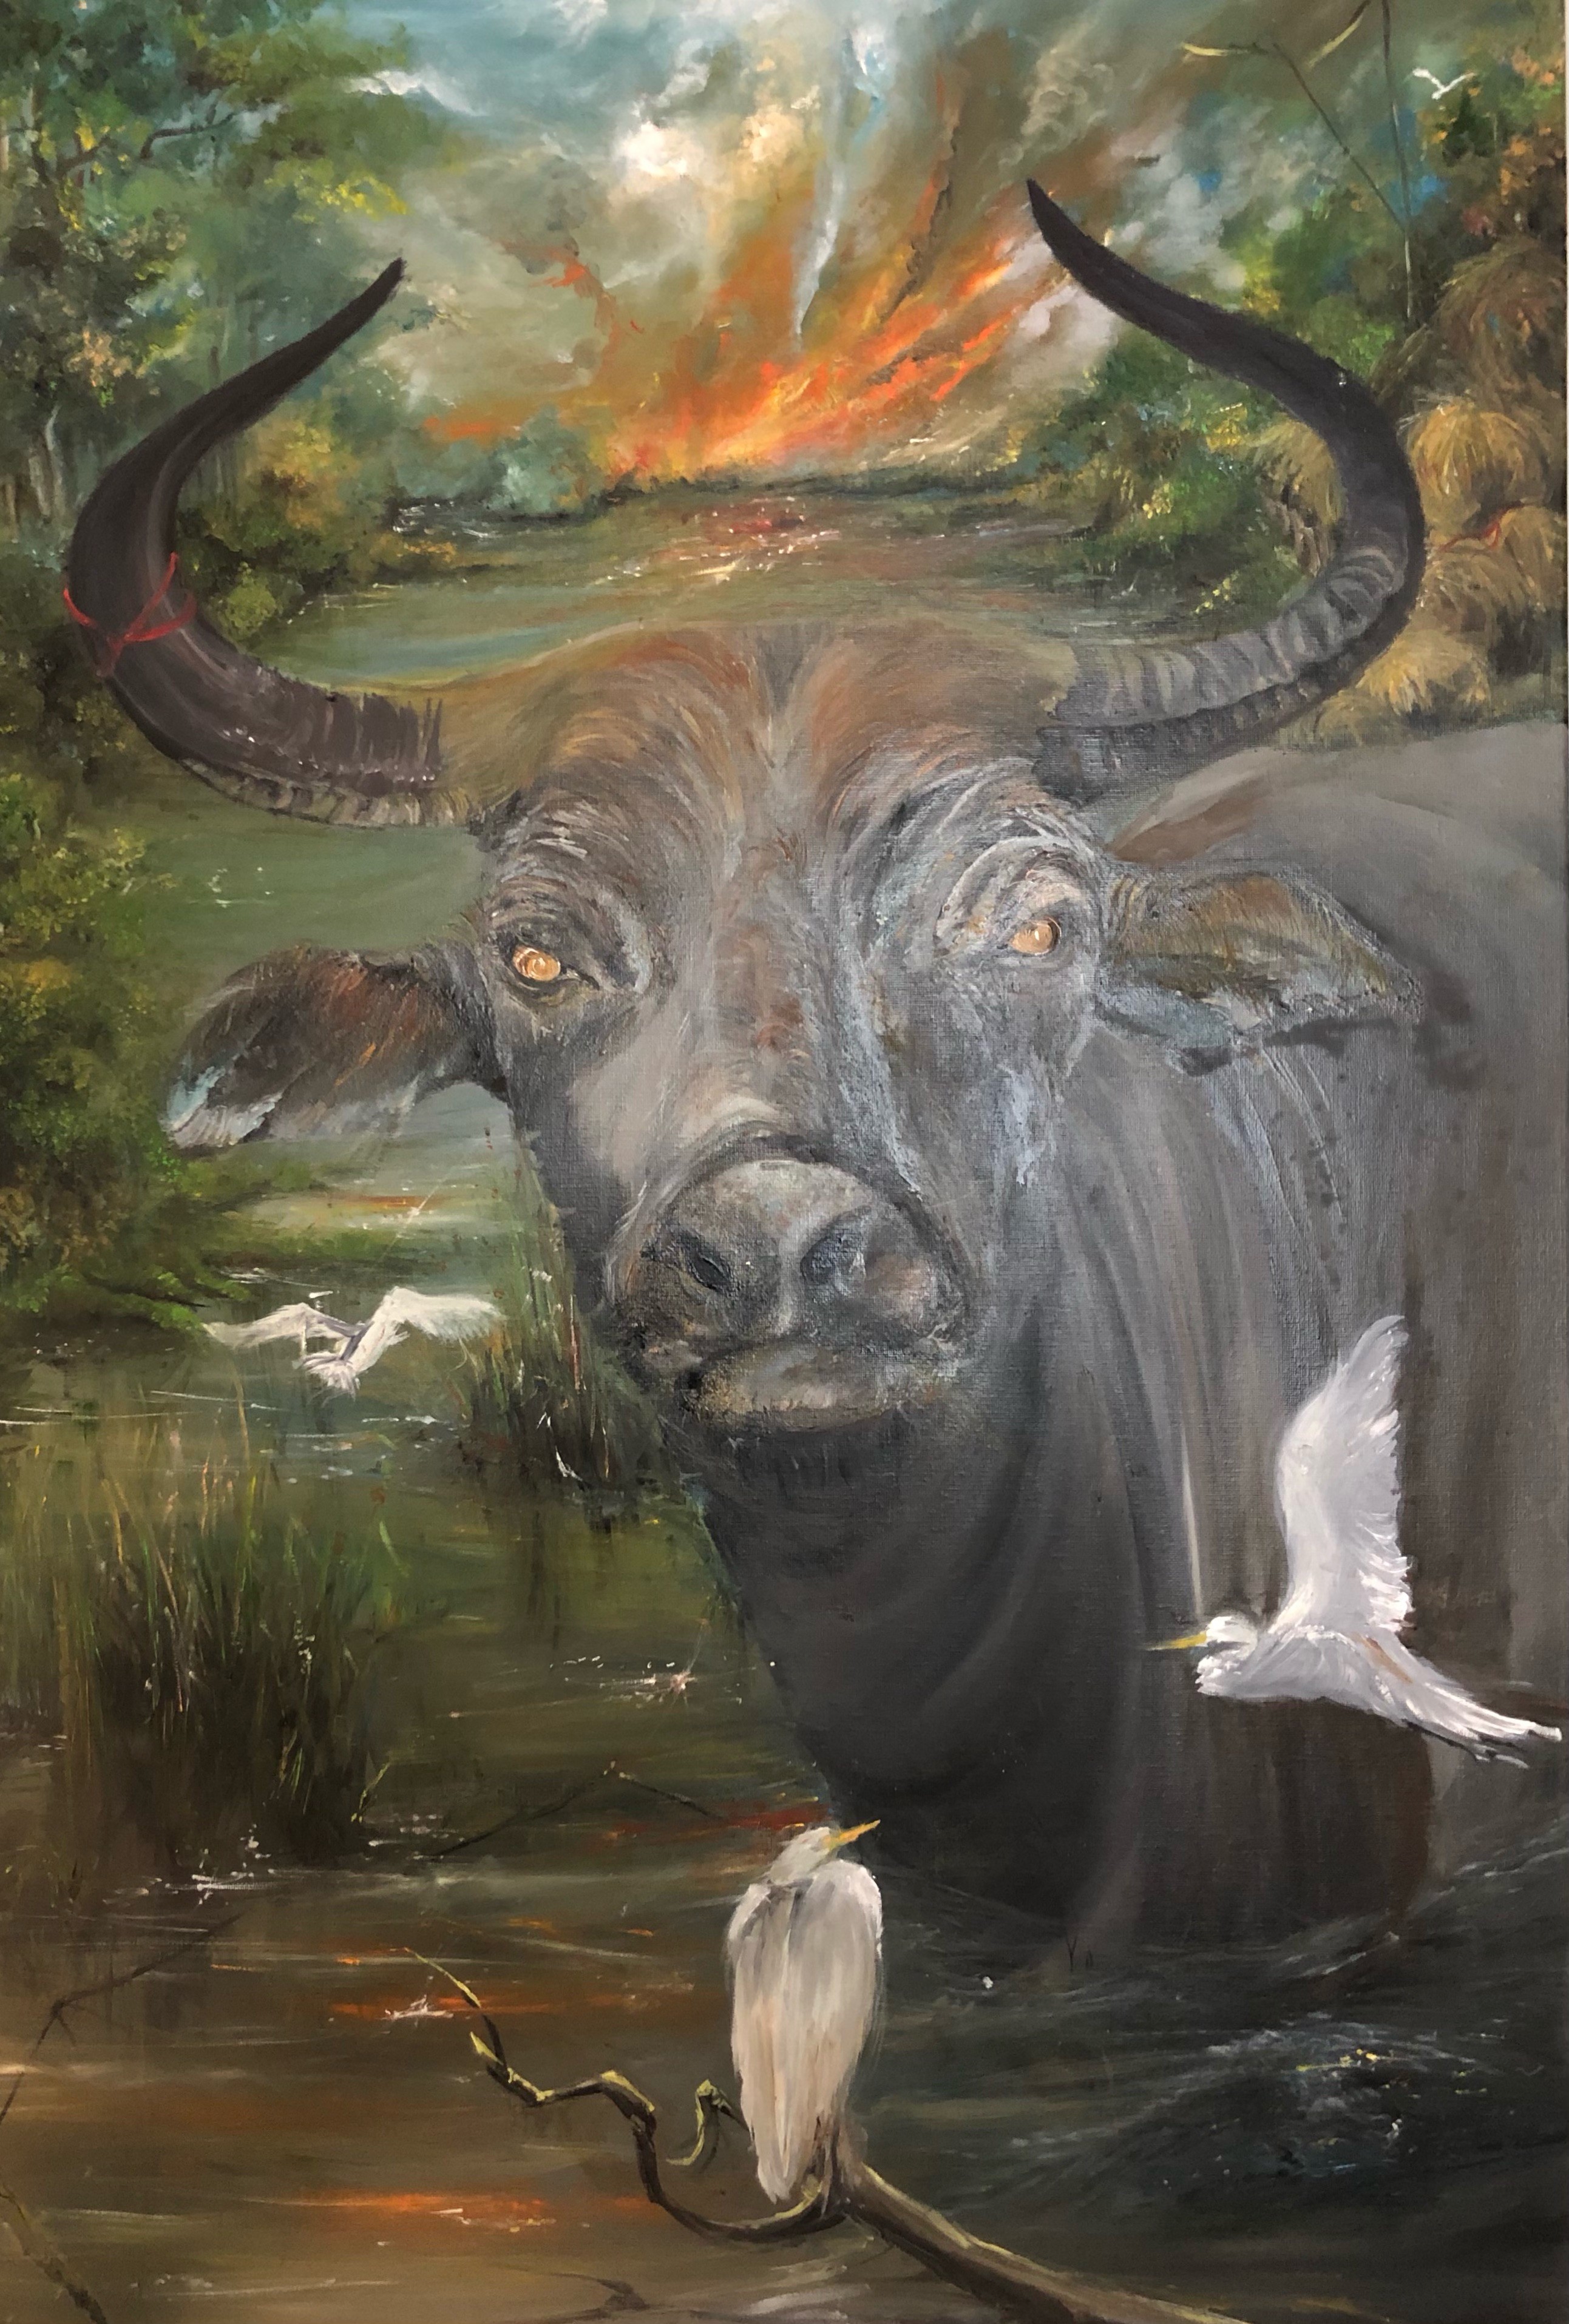 Restin Buffalo by Dulika Silva